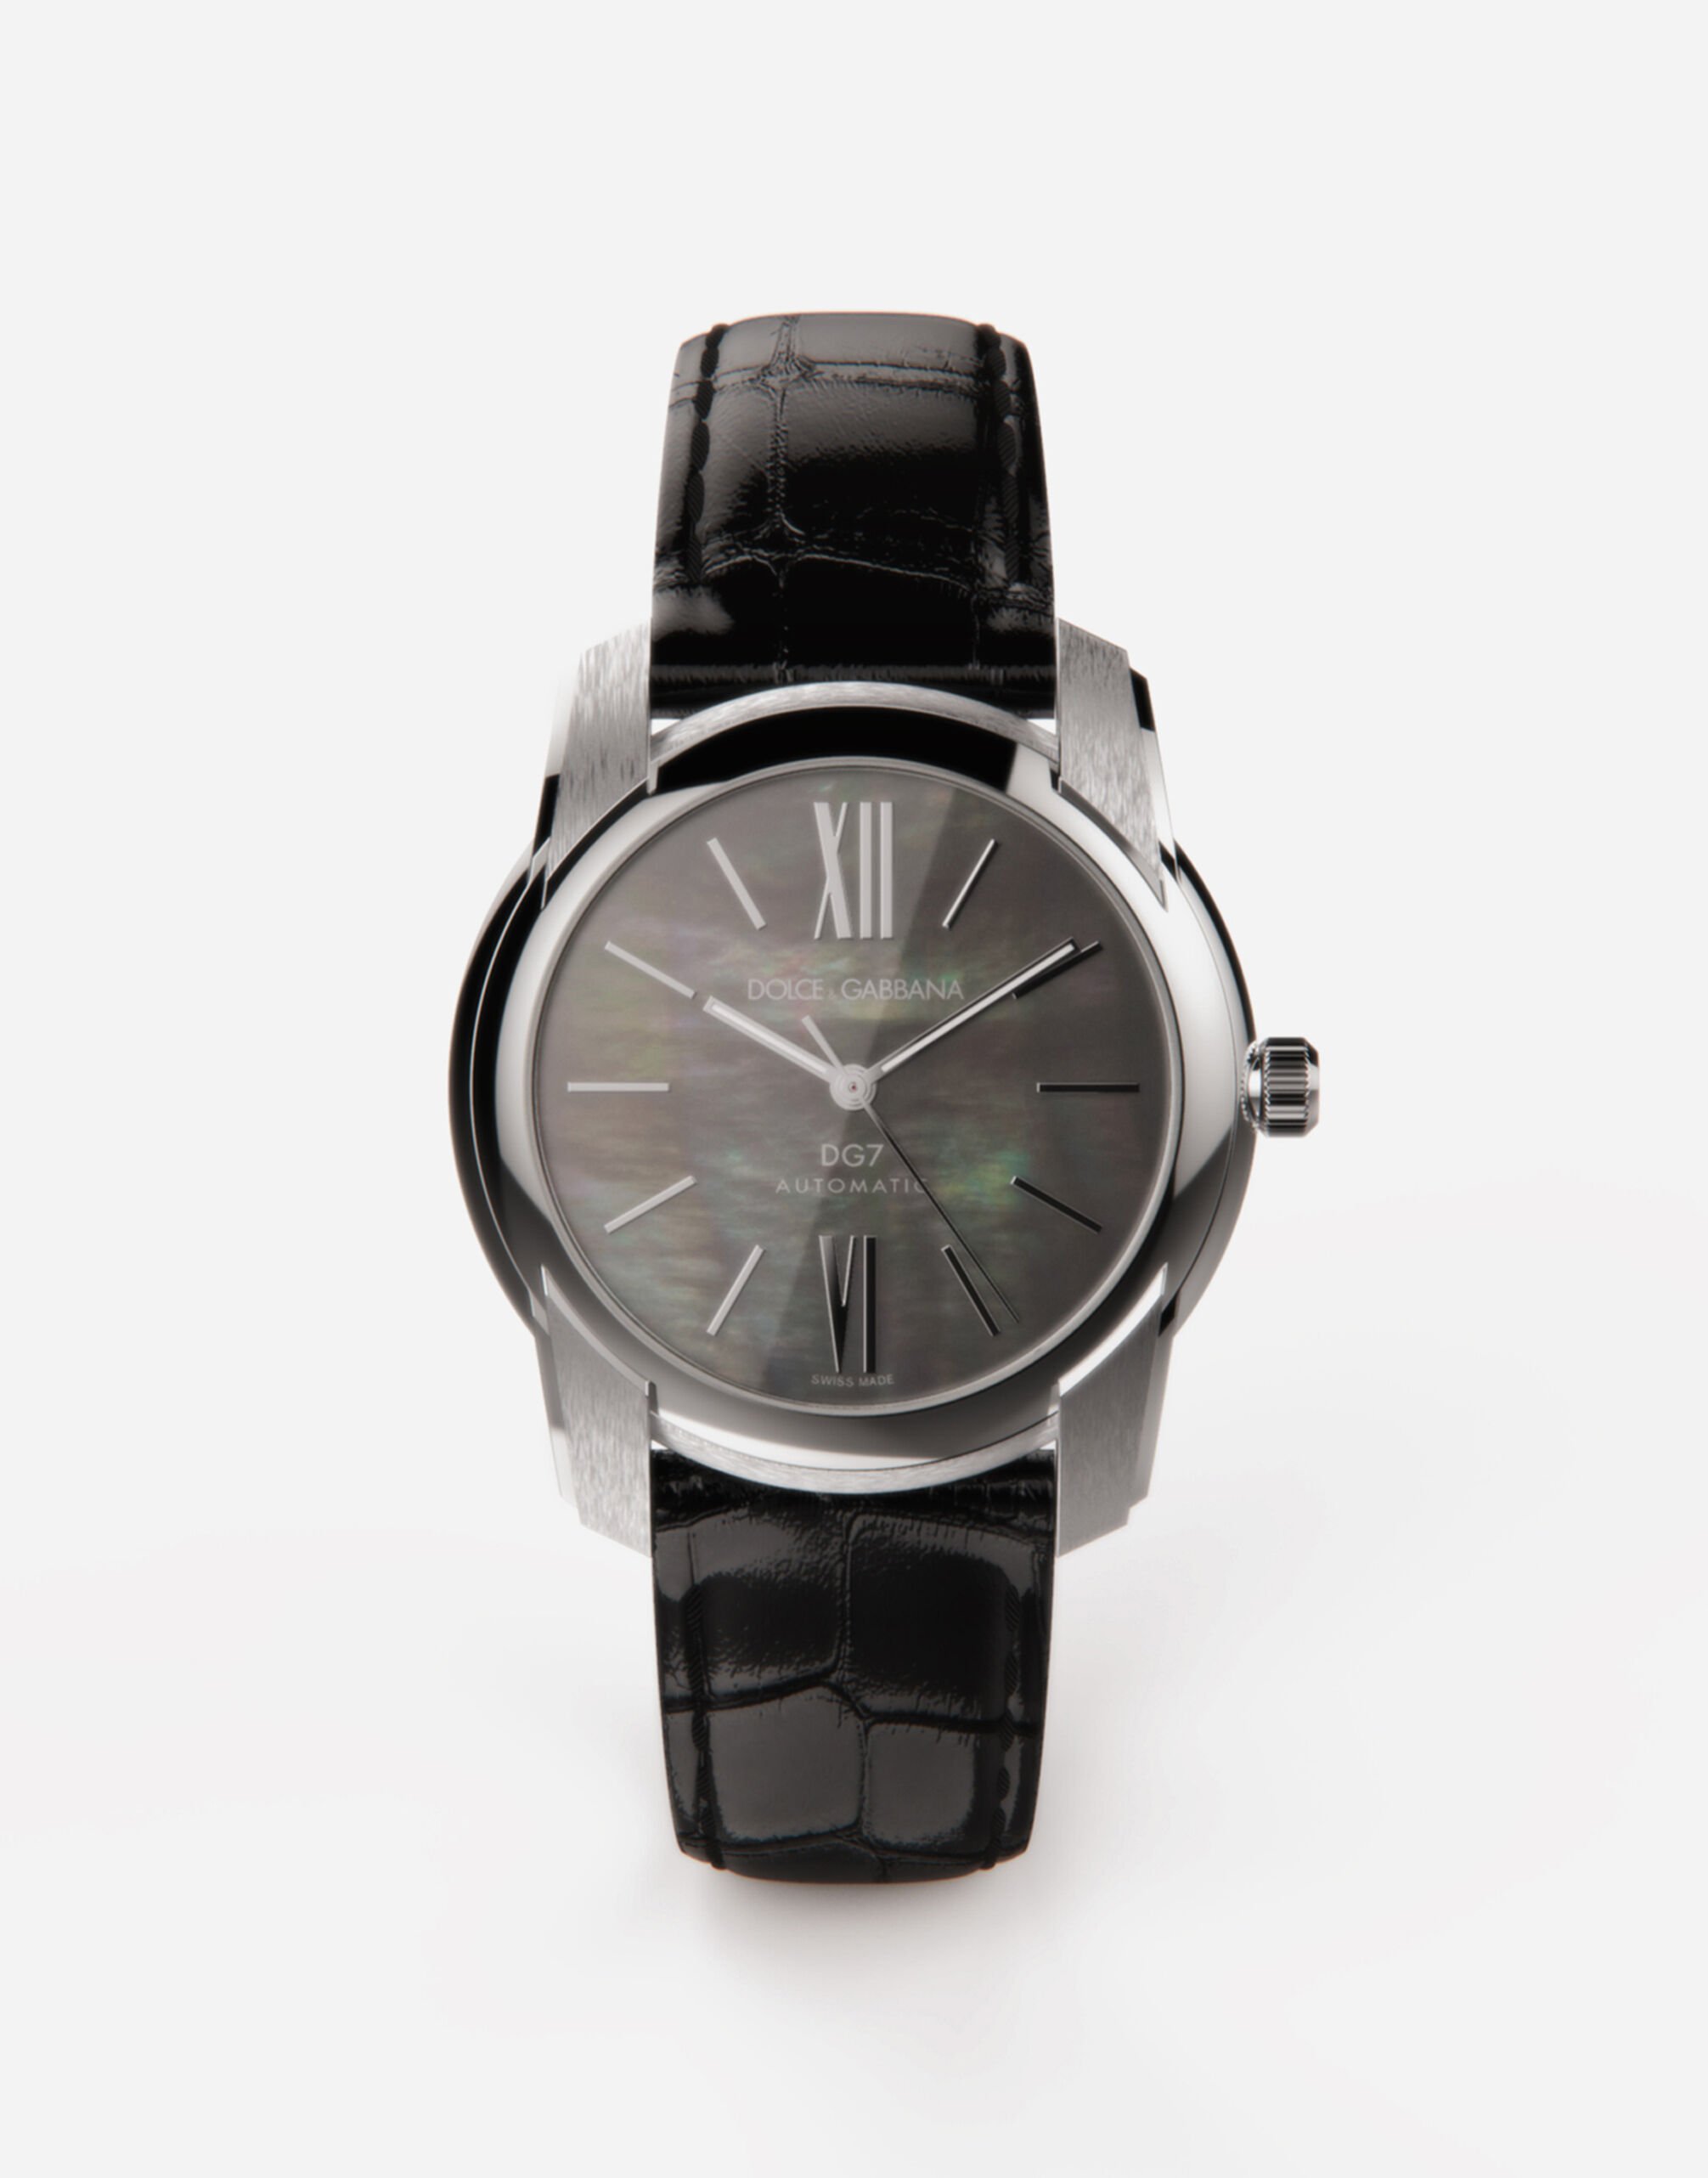 Dolce & Gabbana DG7 watch in steel with black mother of pearl Gold WALK5GWYE01